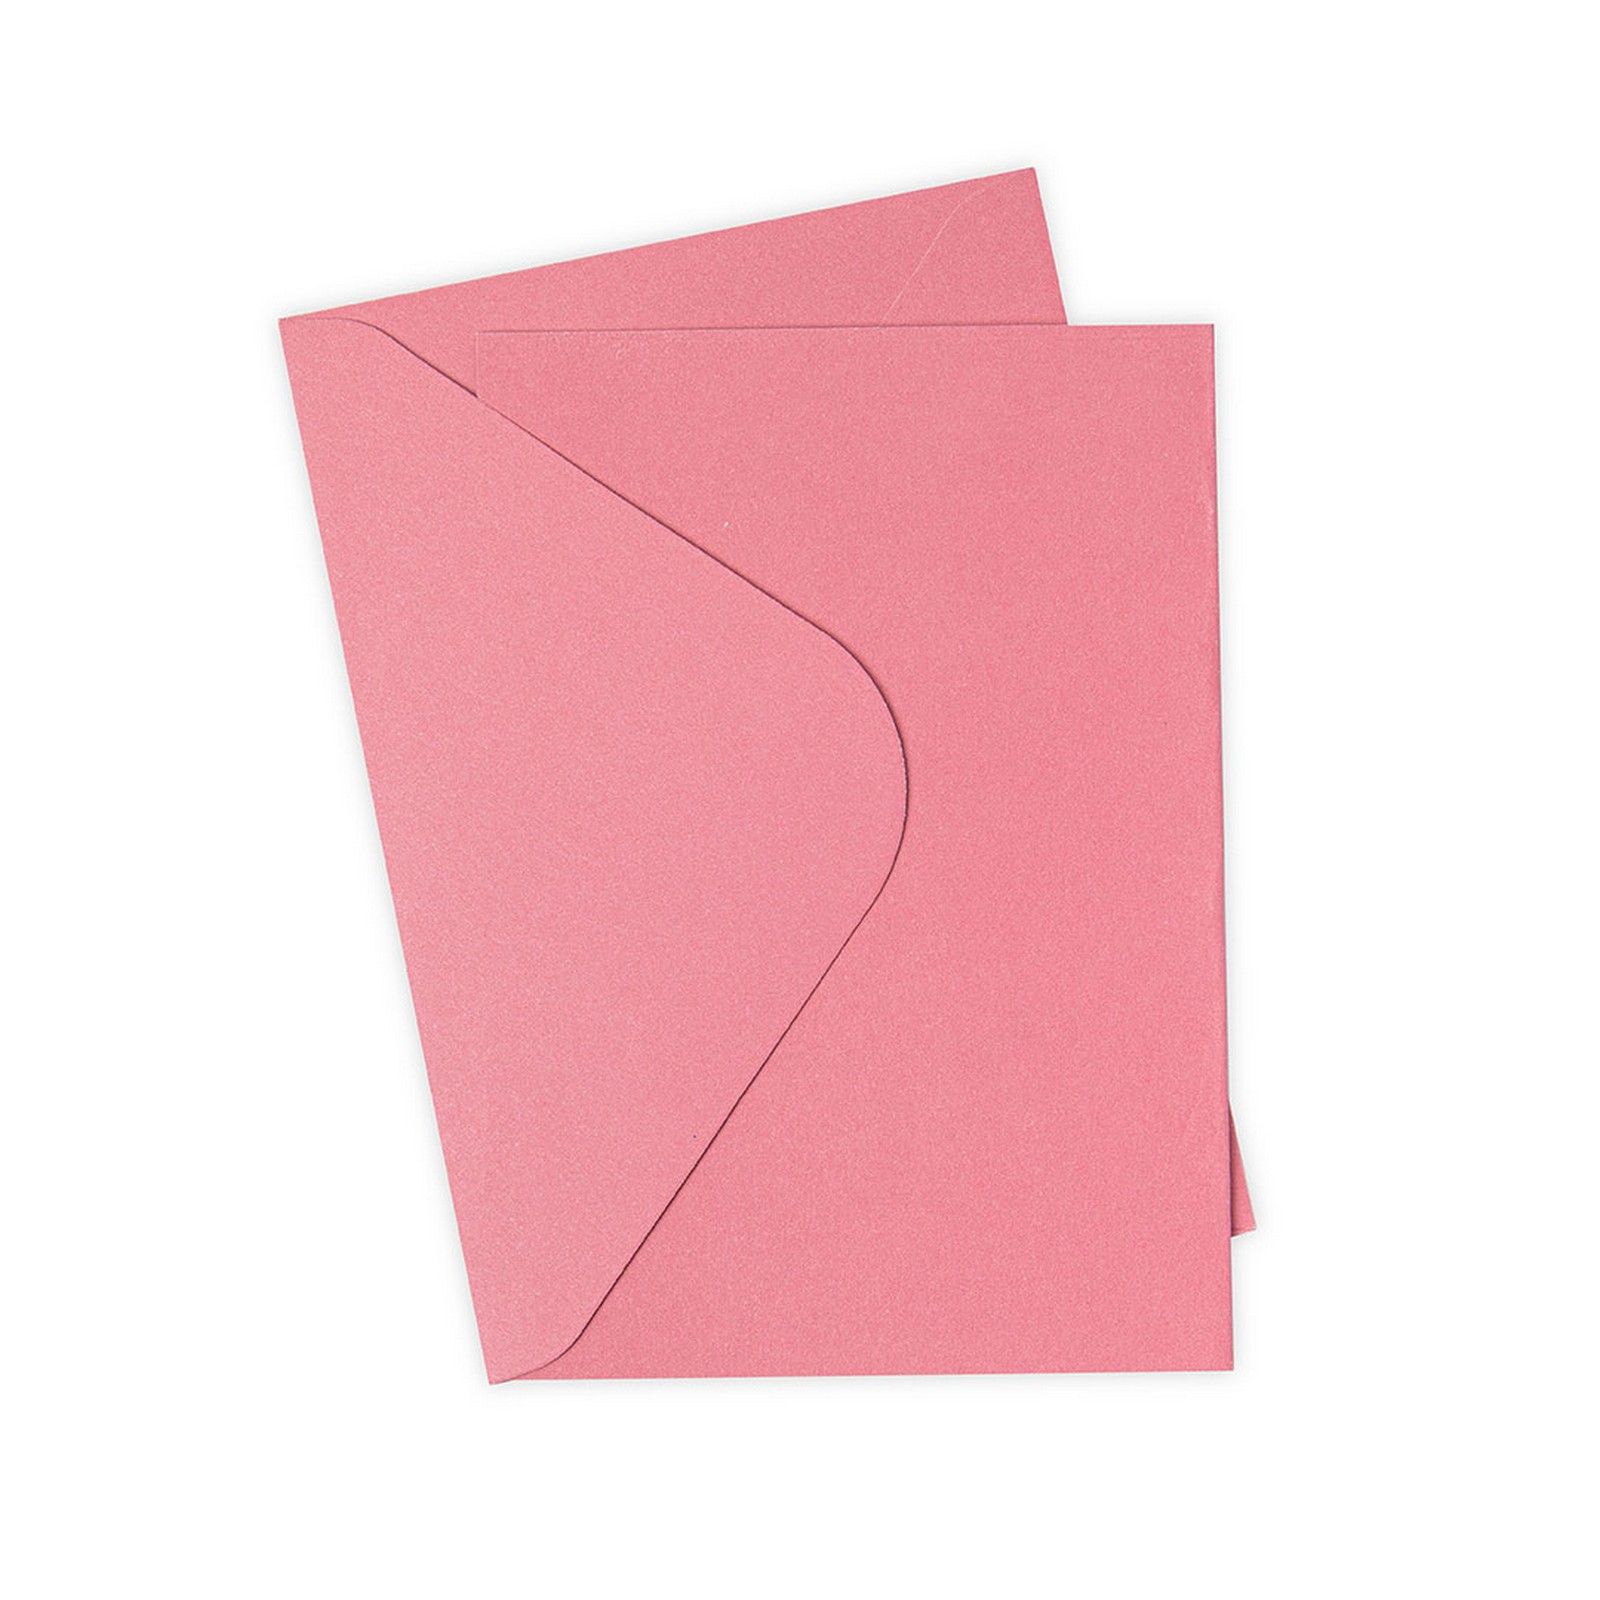 Sizzix • Surfacez Card & Envelope Pack A6 Rose 10PK